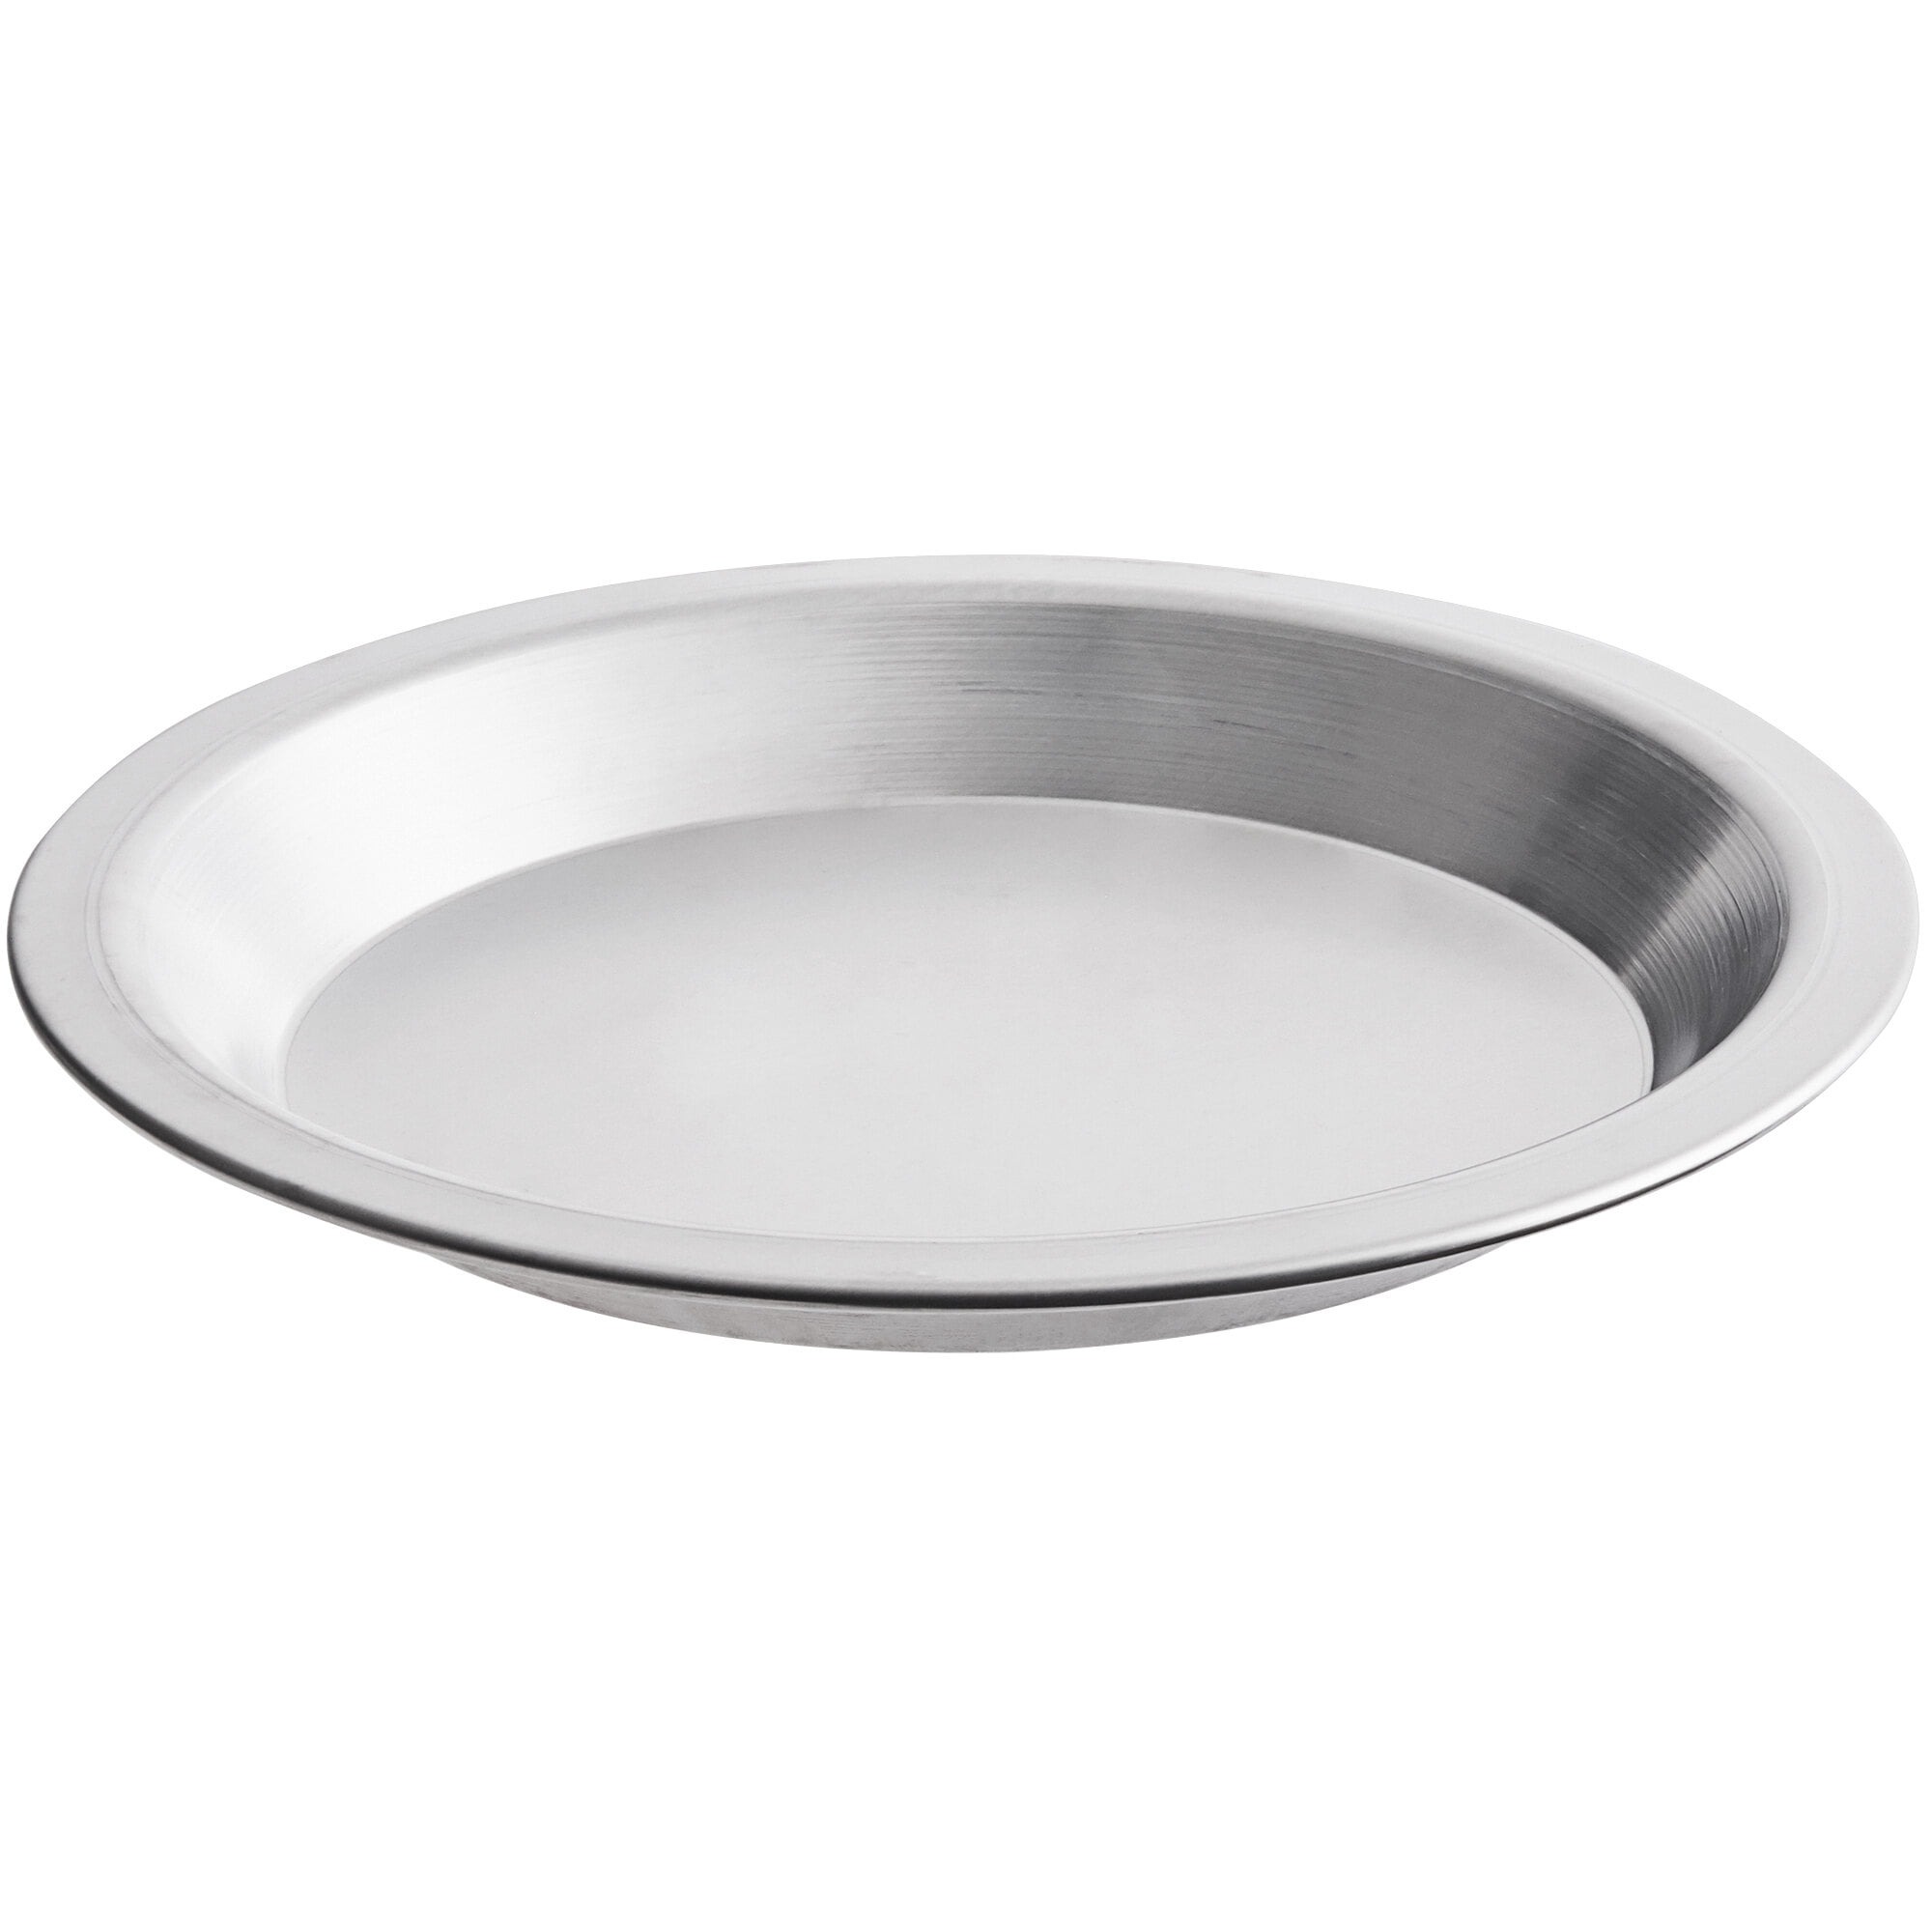 HUBERT Au Gratin Dish 8 oz Oval Stainless Steel 